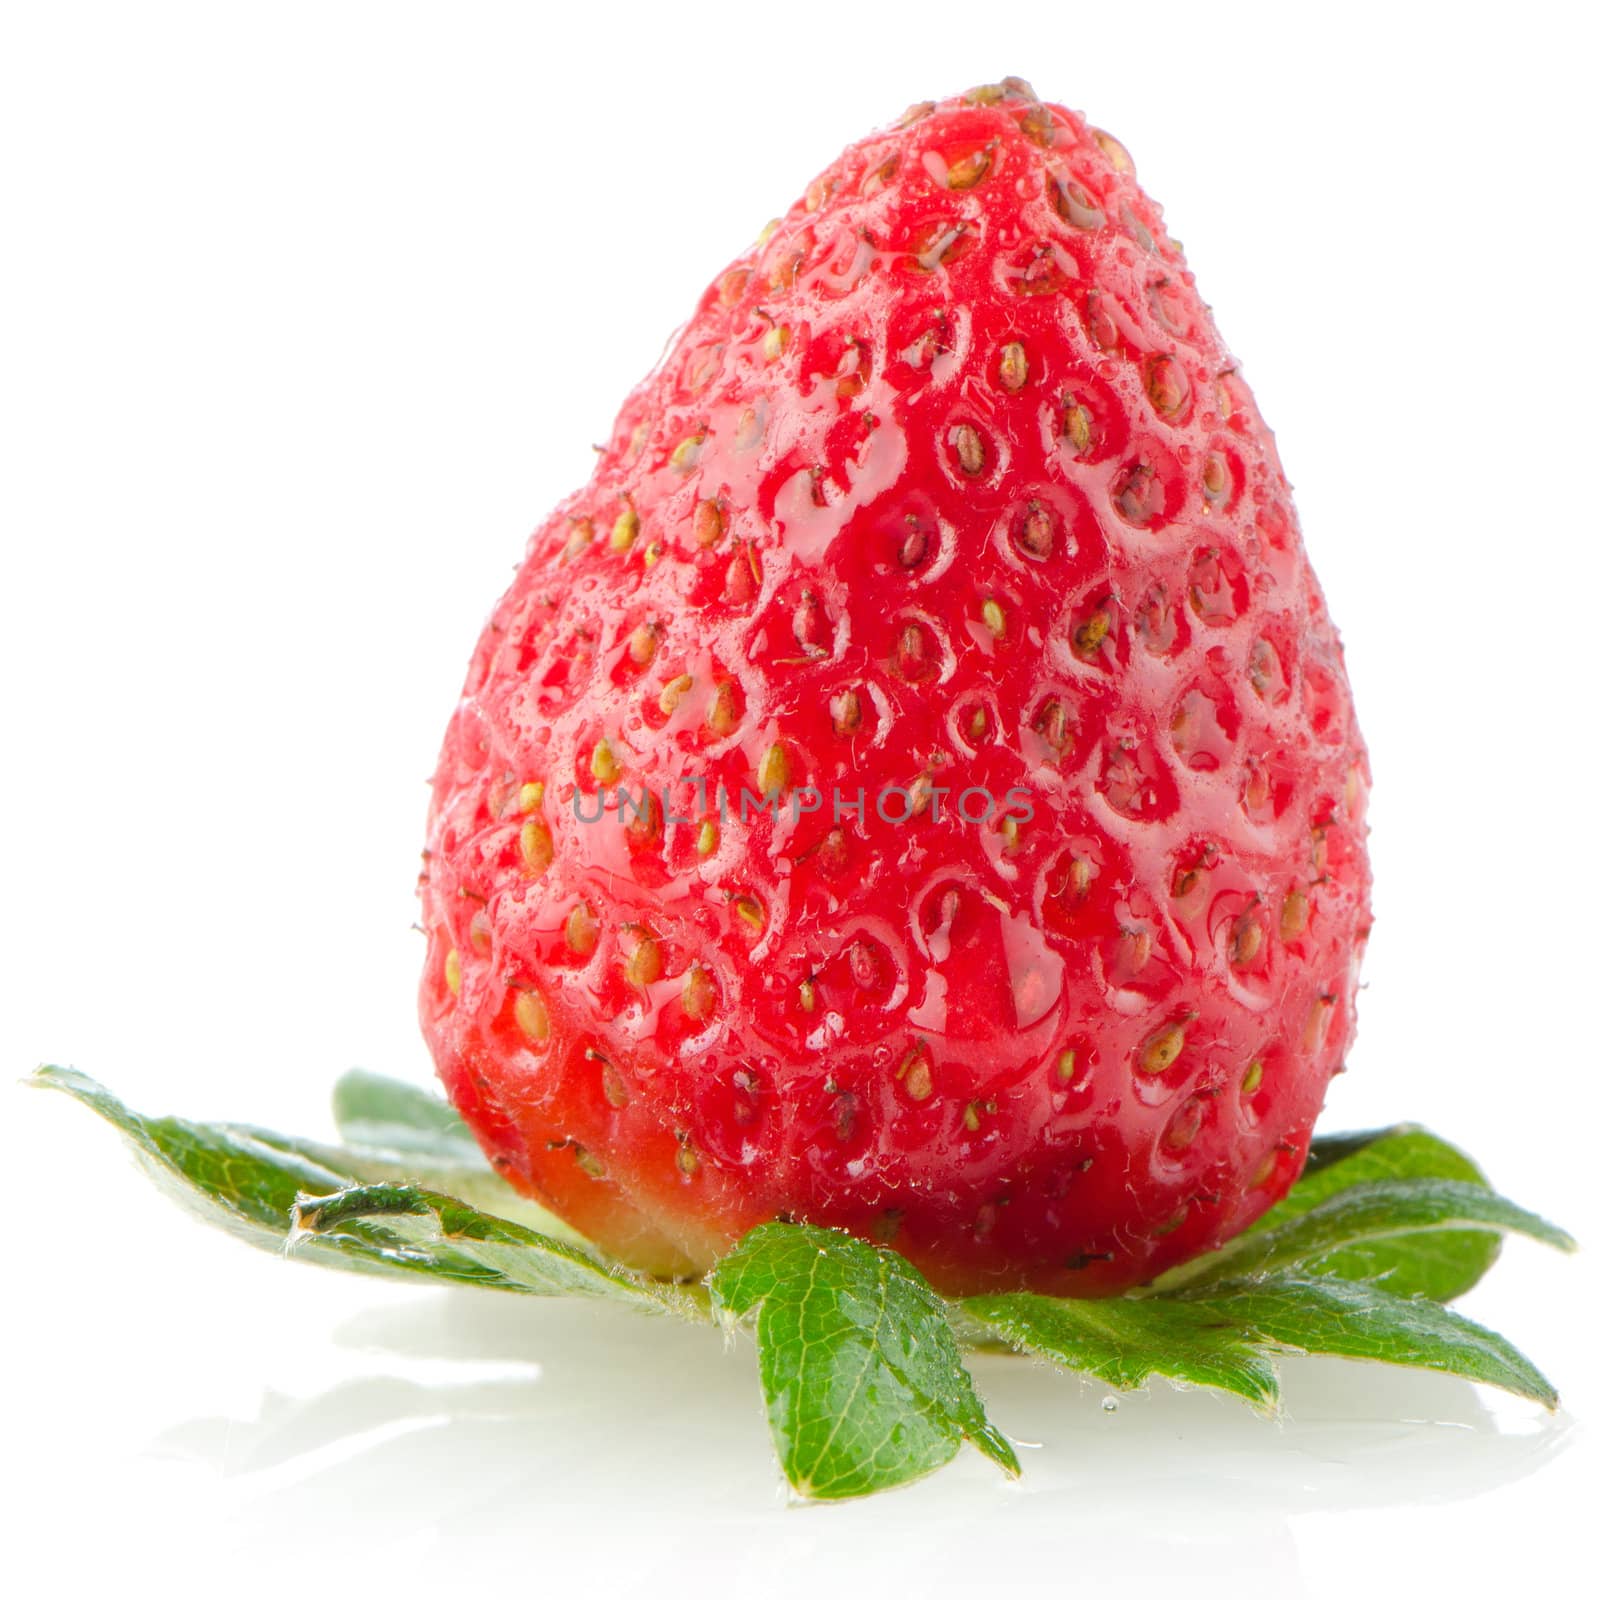 Fresh strawberry on a white reflective background.